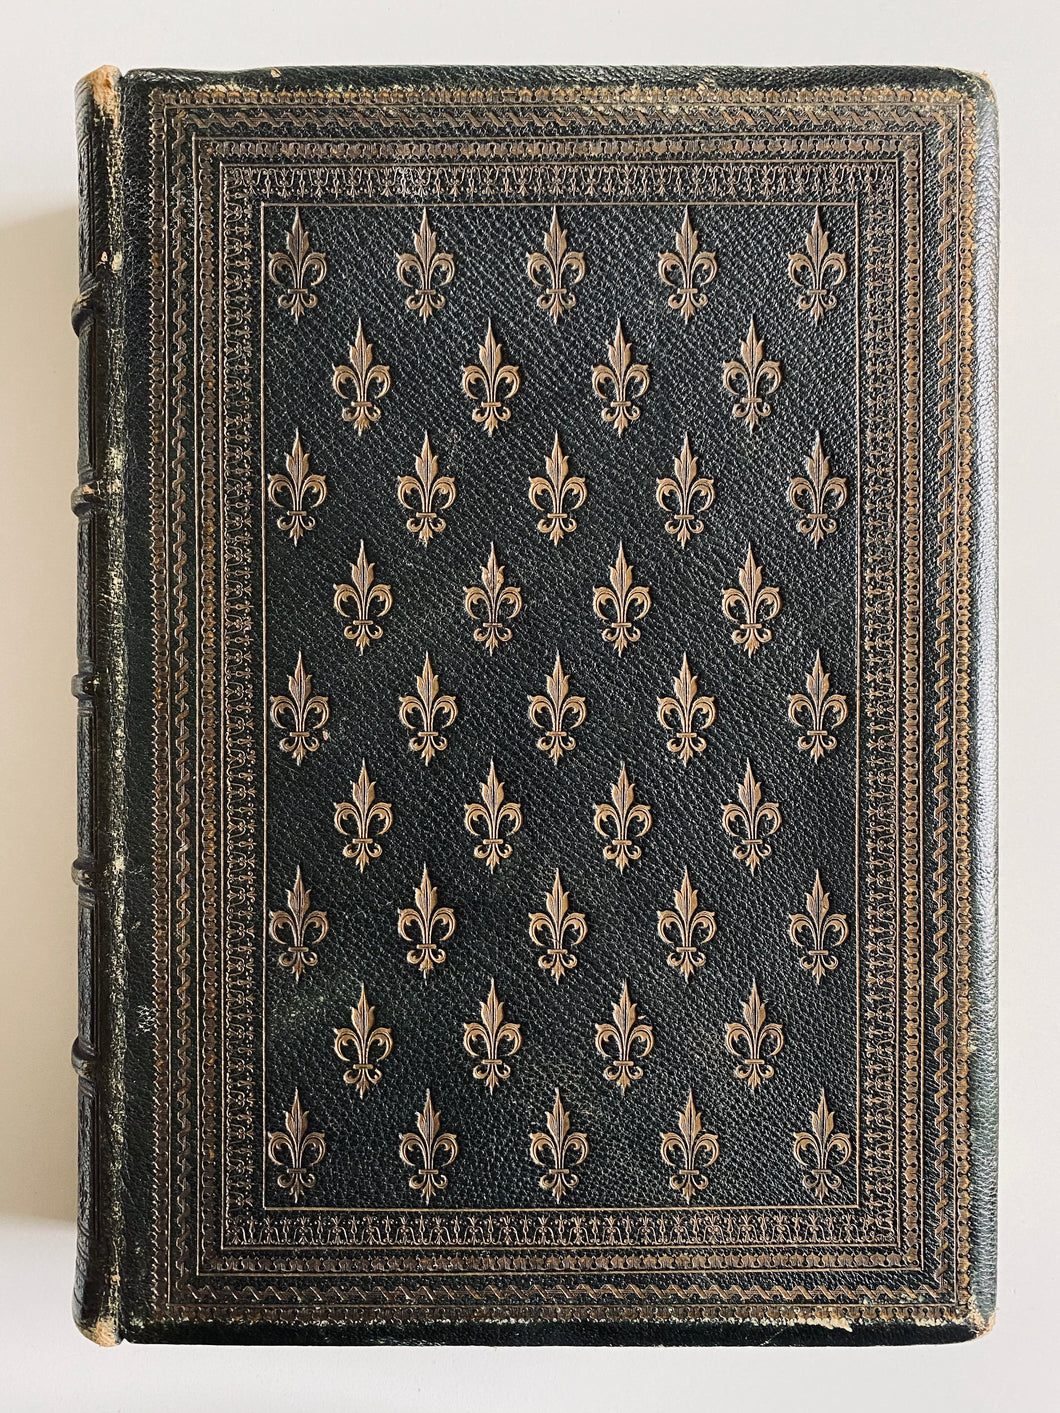 1870 JOHN FOXE. Foxe's Book of Martyrs. Stunning Near-Folio Fine Binding Edition. Lovely.